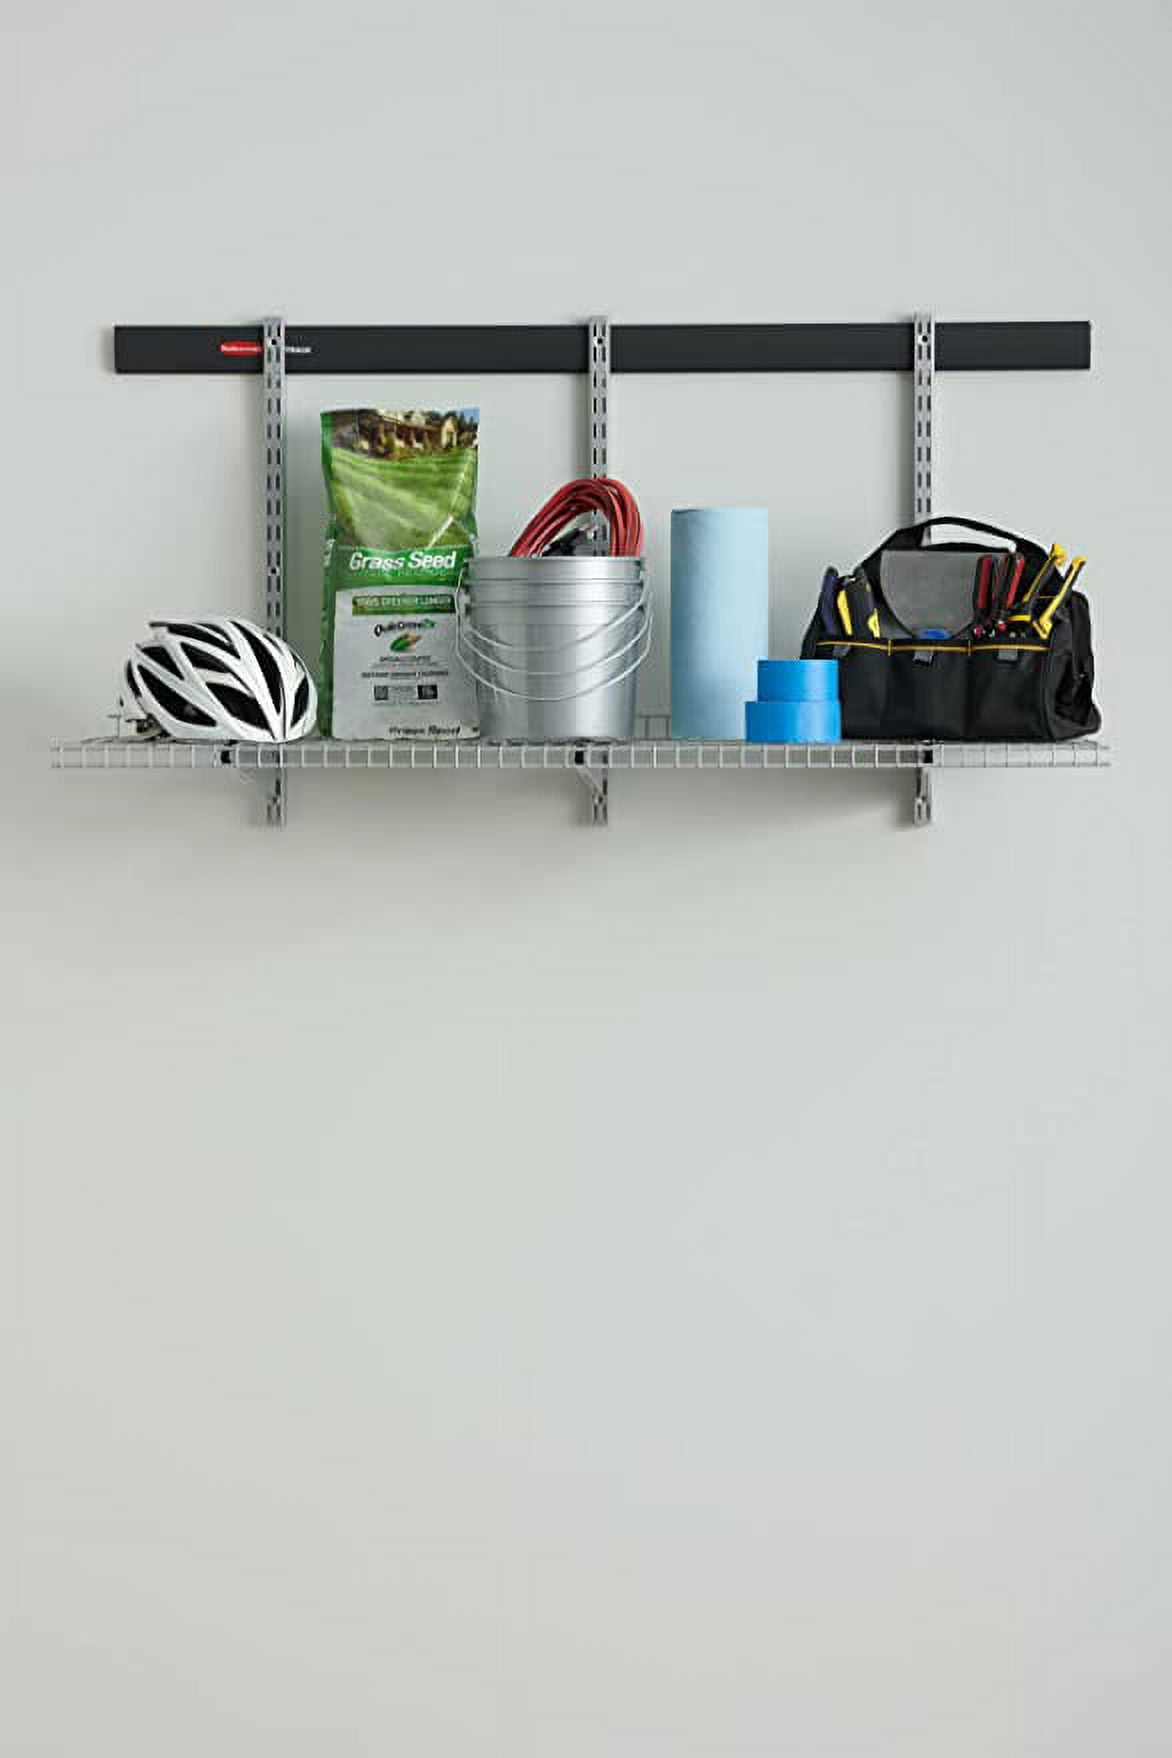  Rubbermaid Fasttrack Rail Storage 48x12 3-Shelf Kit, 350 lbs.  Per Shelf, for Home/Garage/Shed/Workshop Organization : Home & Kitchen